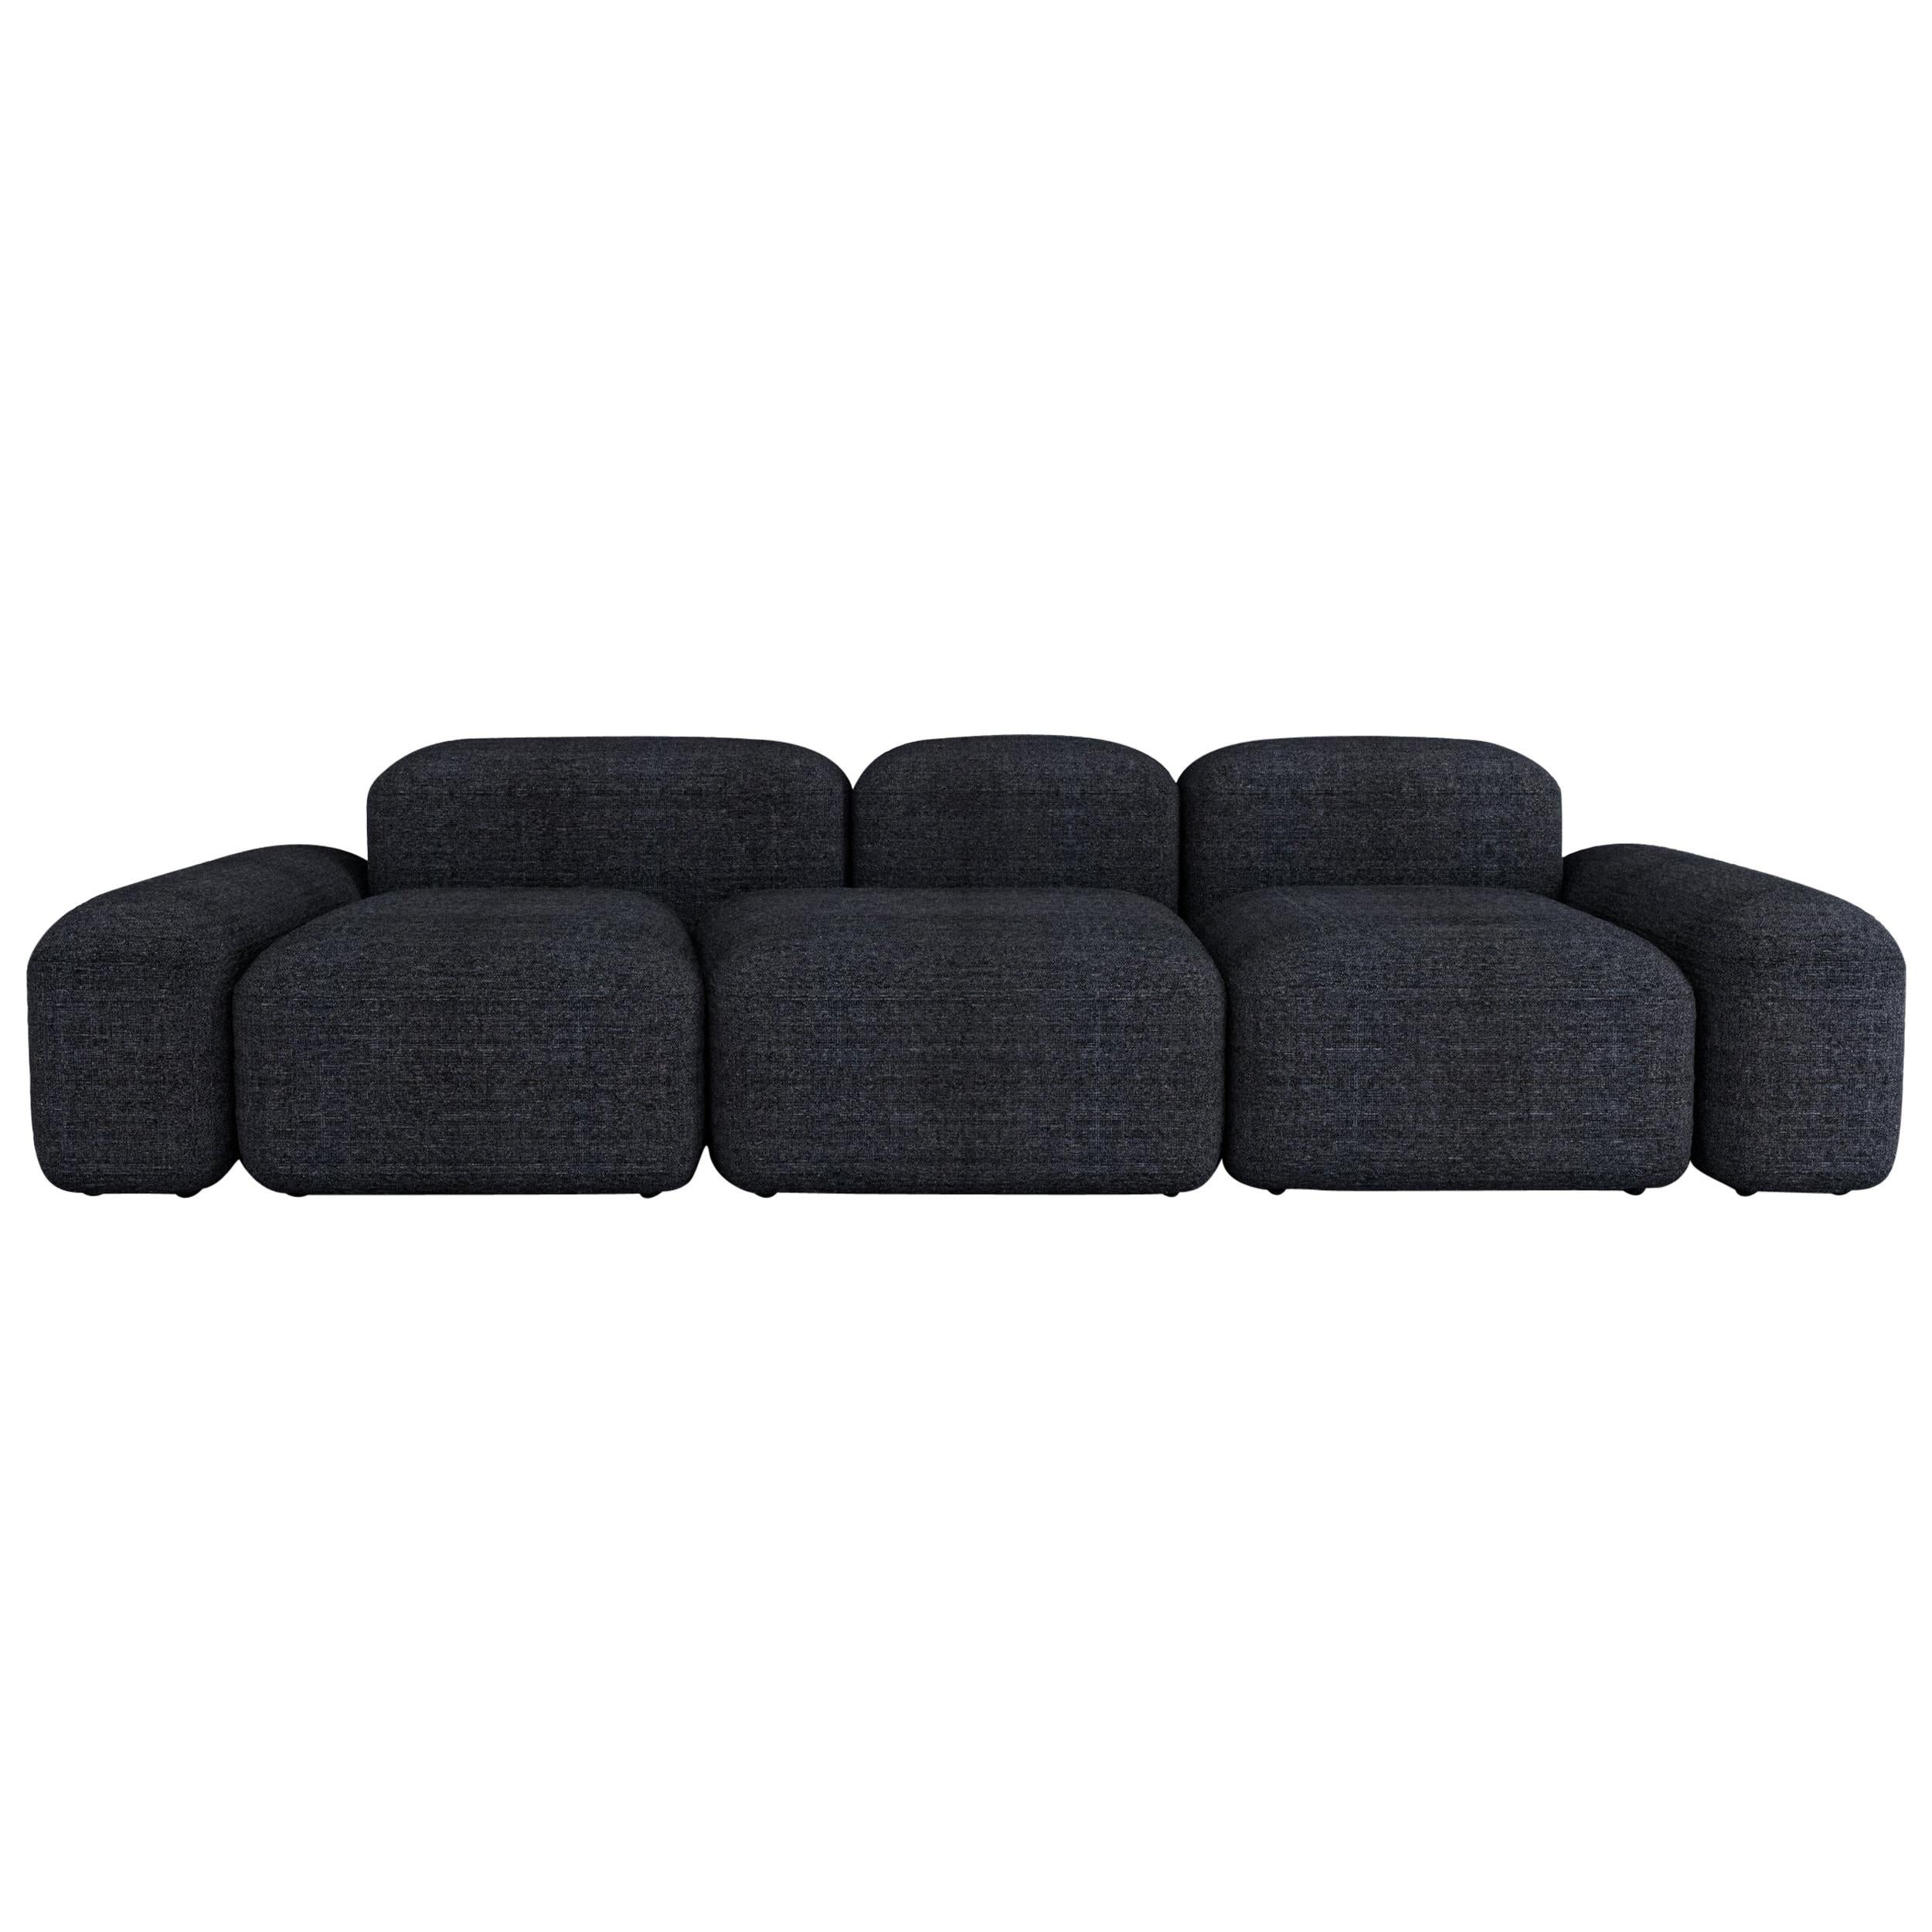 Modular and Customizable Sofa 'Lapis' 296 'Many Layouts and Fabrics Available'